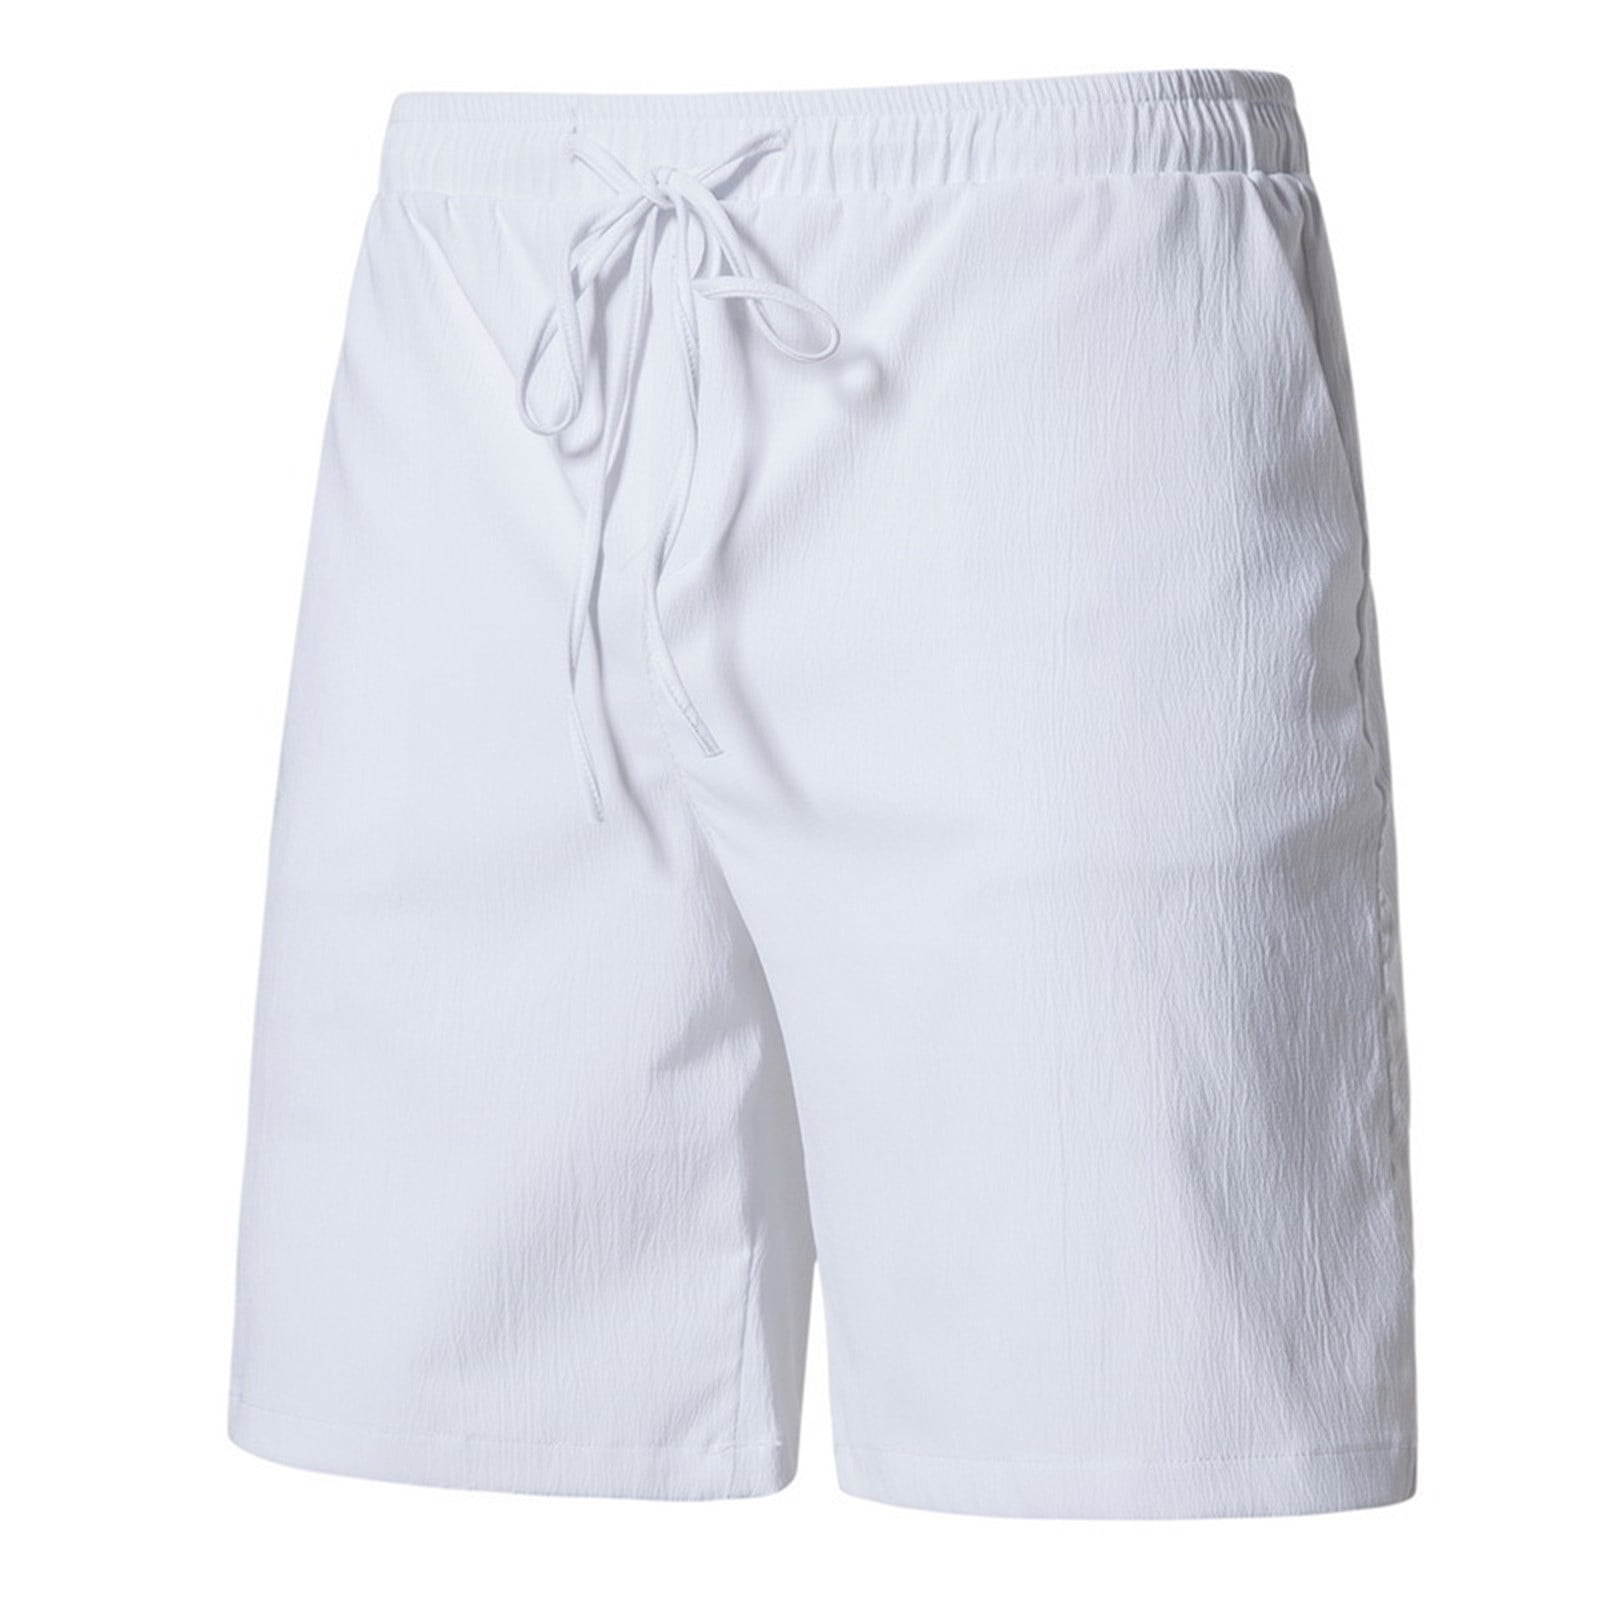 Ierhent Shorts for Men Athletic Men's Stretch Cargo Short(White,3XL ...